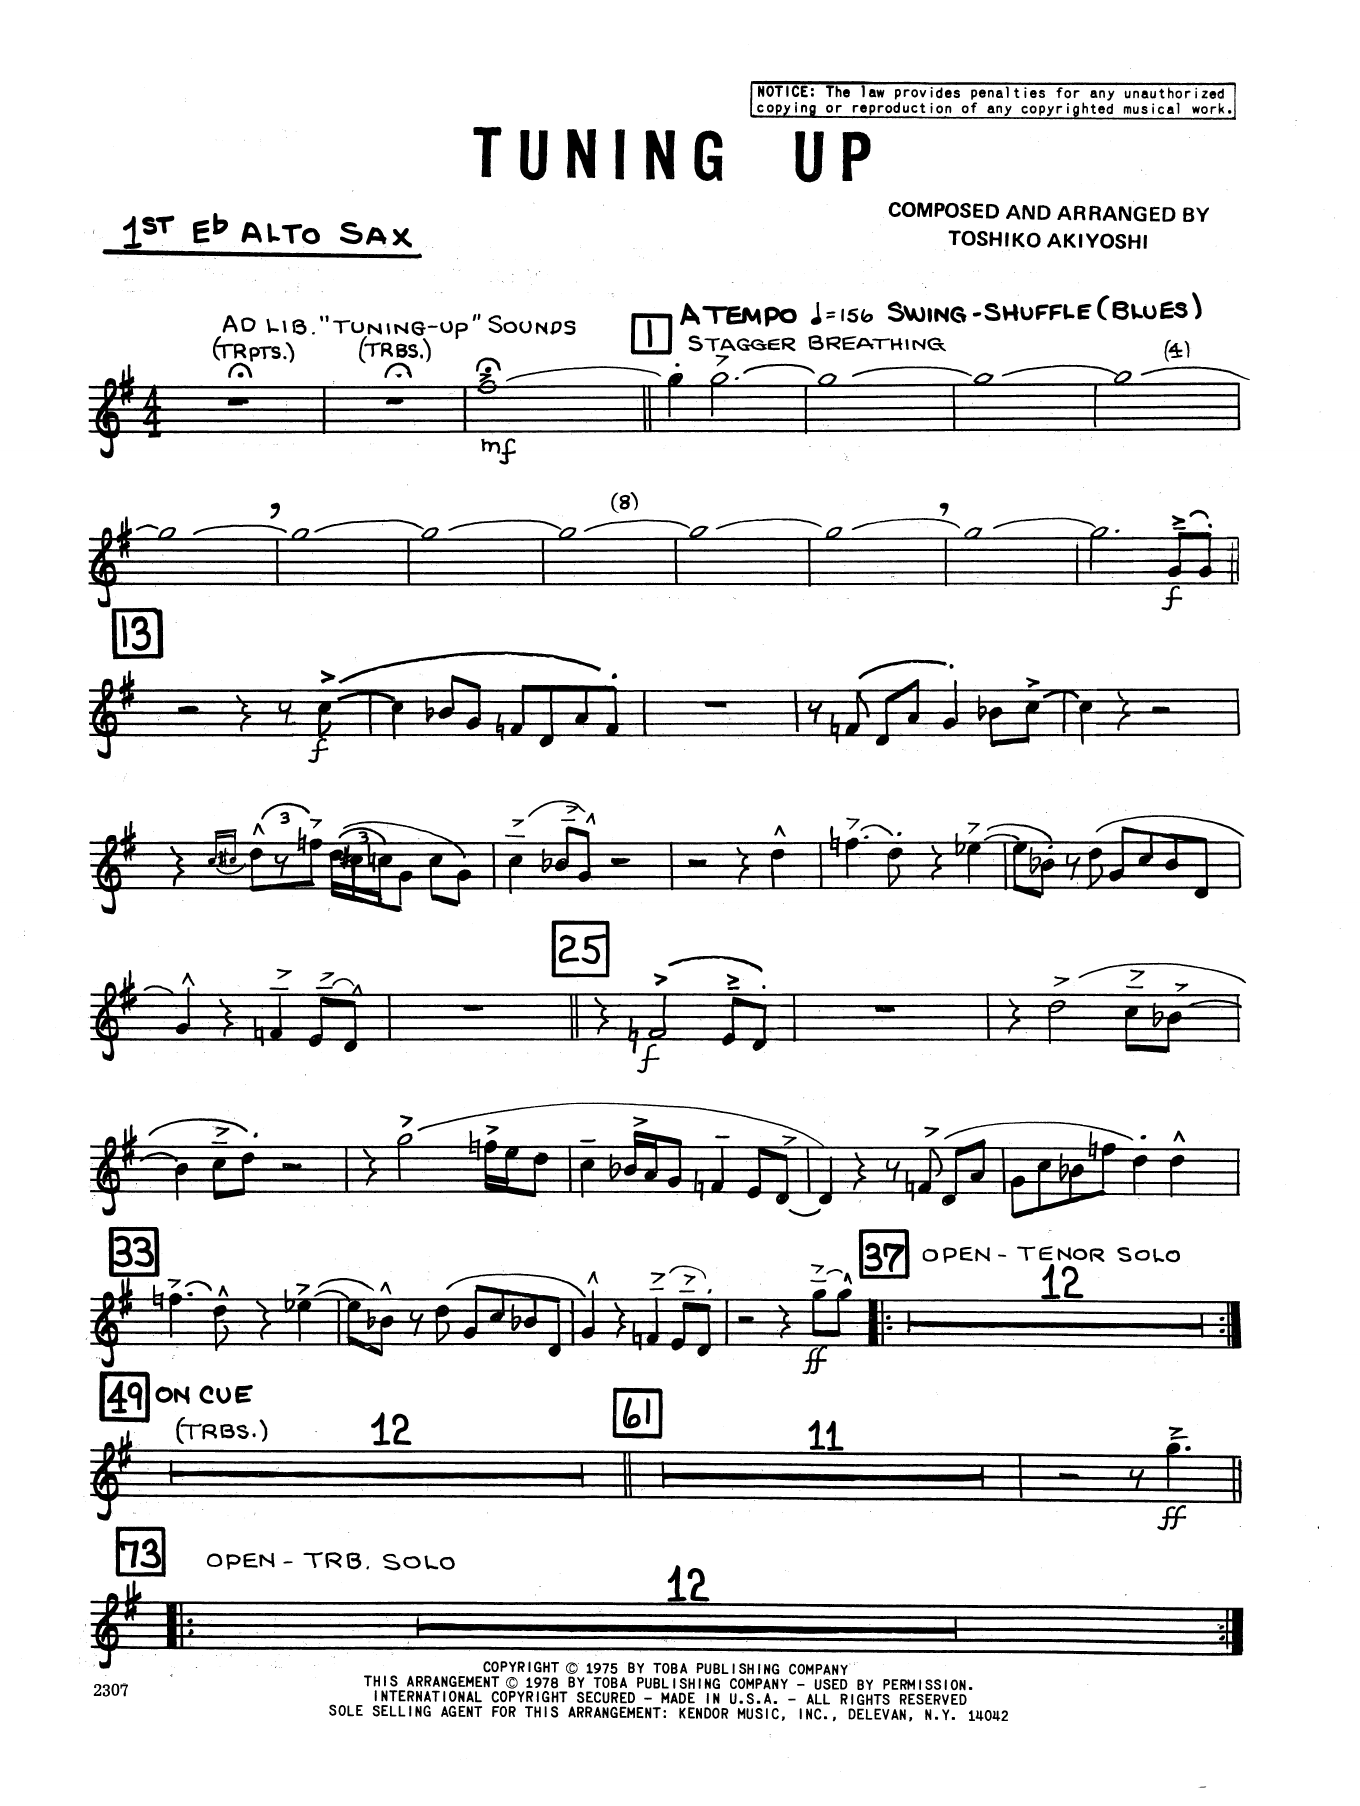 Download Toshiko Akiyoshi Tuning Up - 1st Eb Alto Saxophone Sheet Music